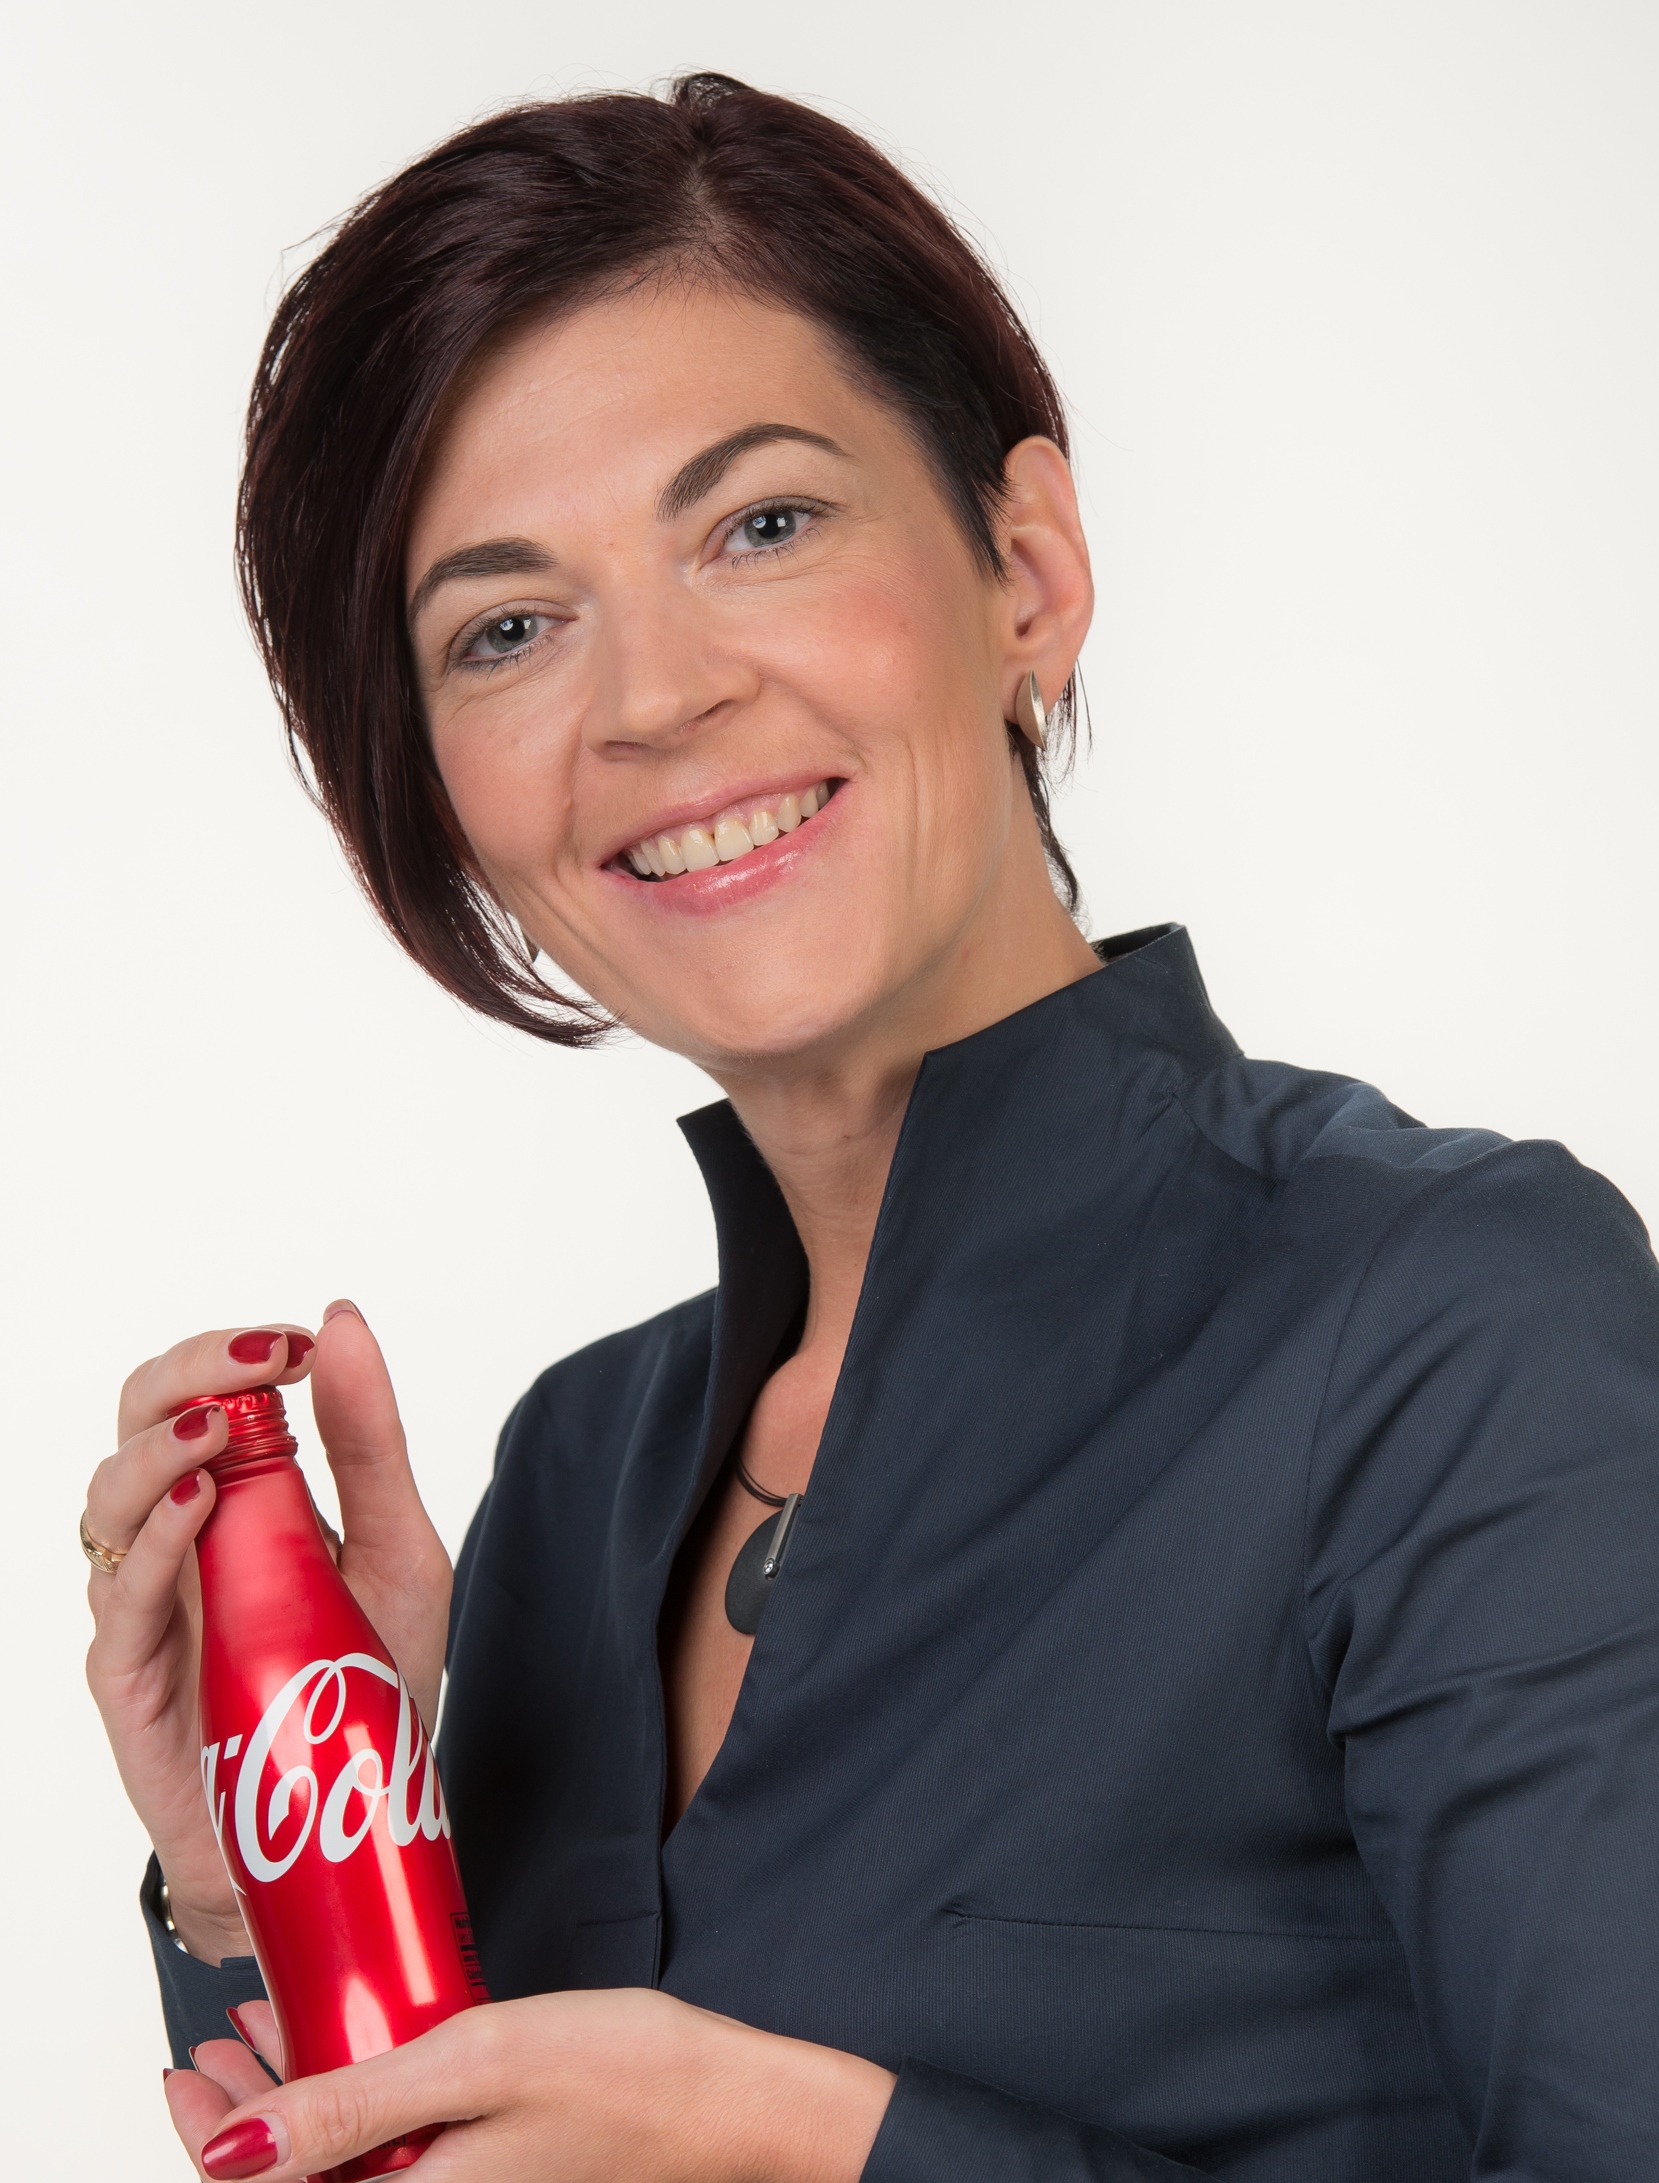 Nowa Senior Stills Activation Manager w Coca-Cola Poland Services